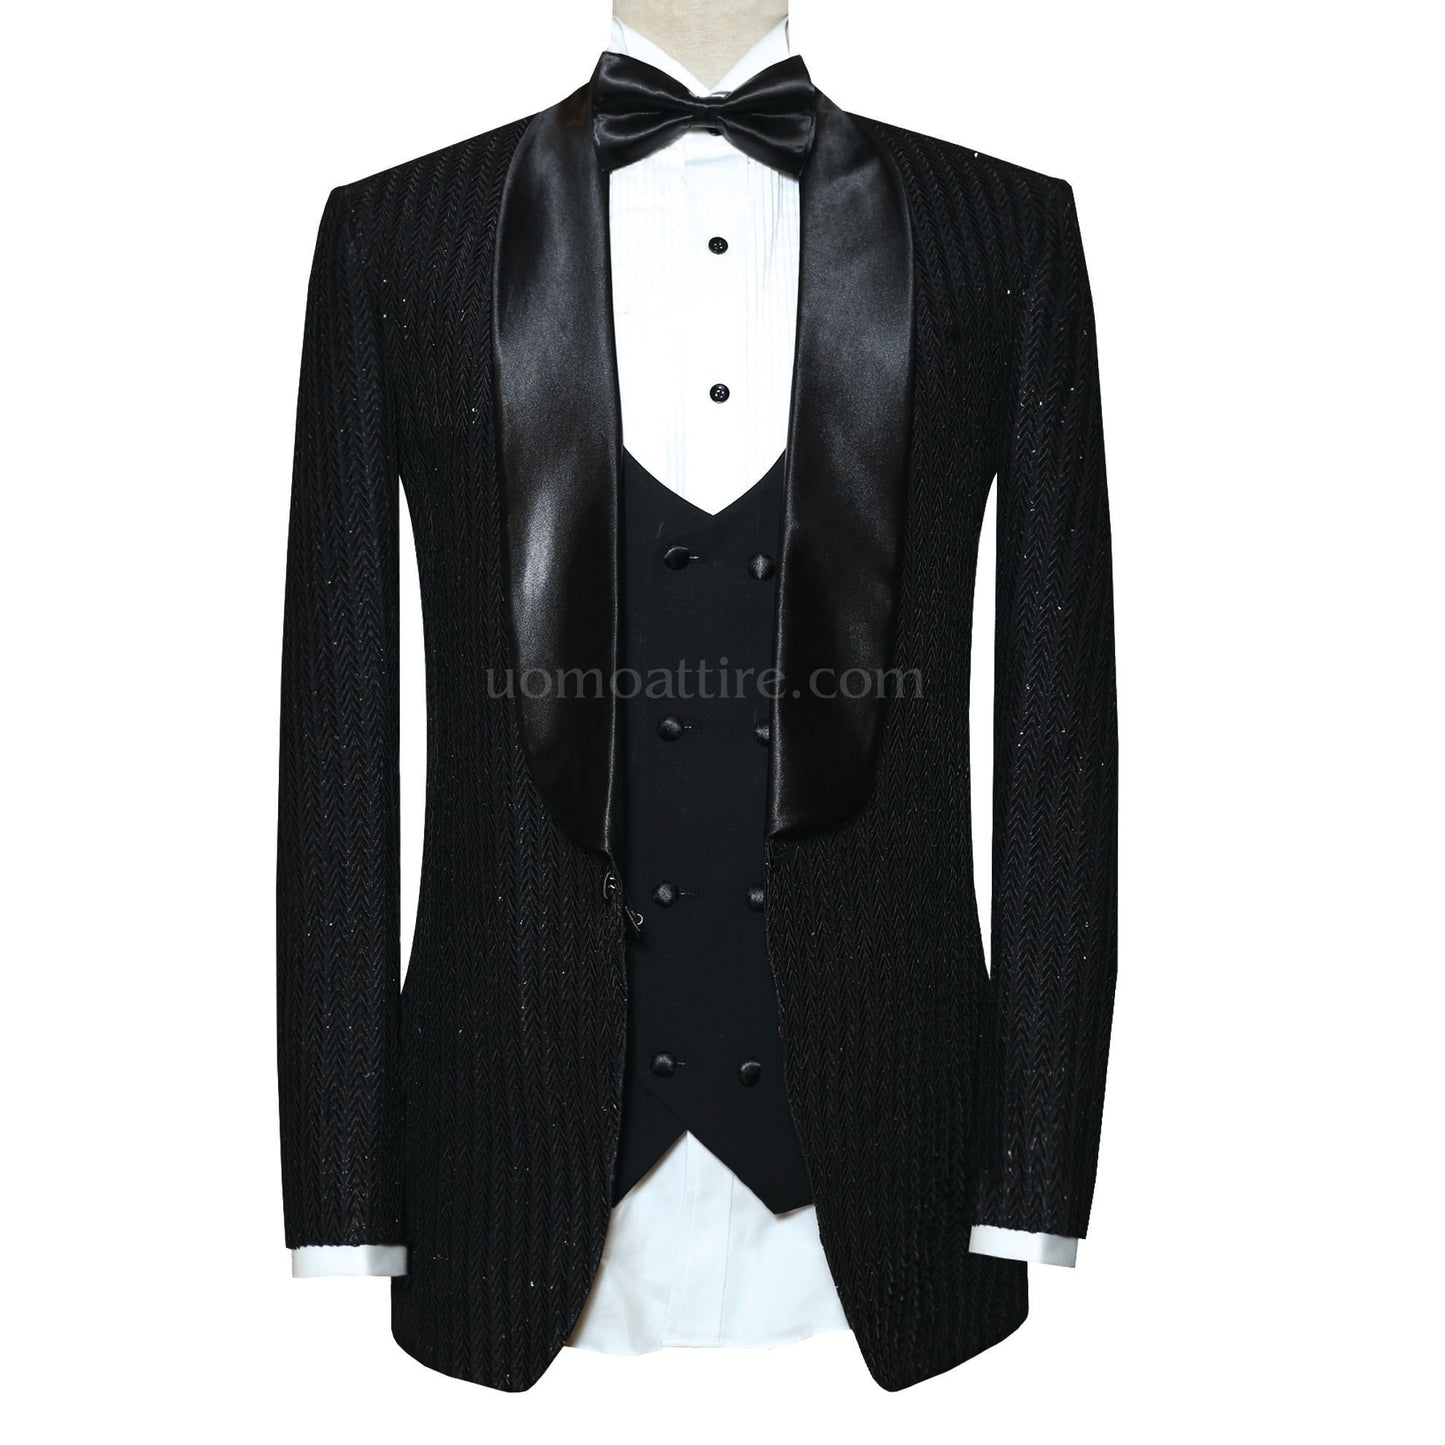 Black Tuxedo Suit - 3 Piece